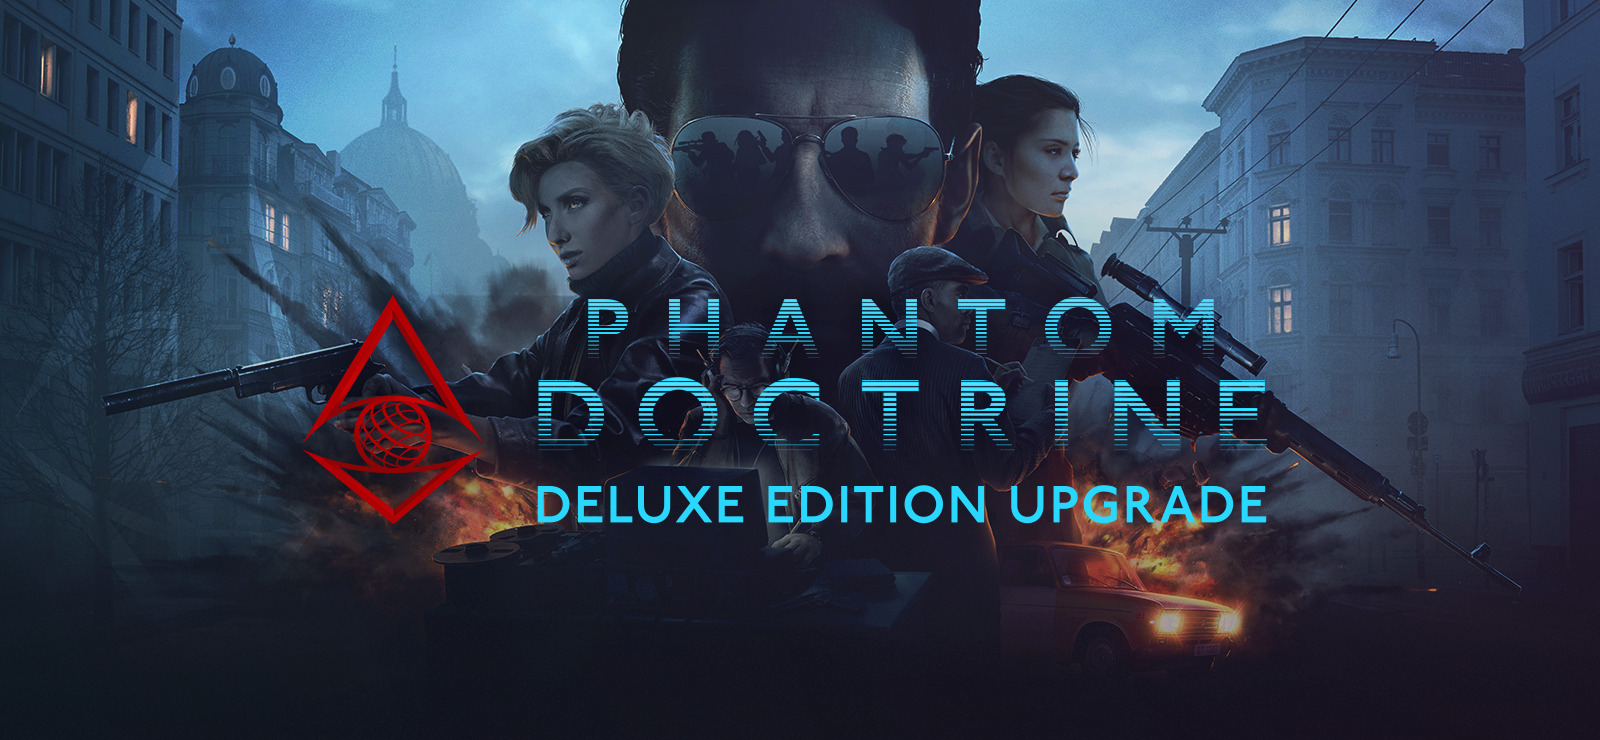 download phantom doctrine